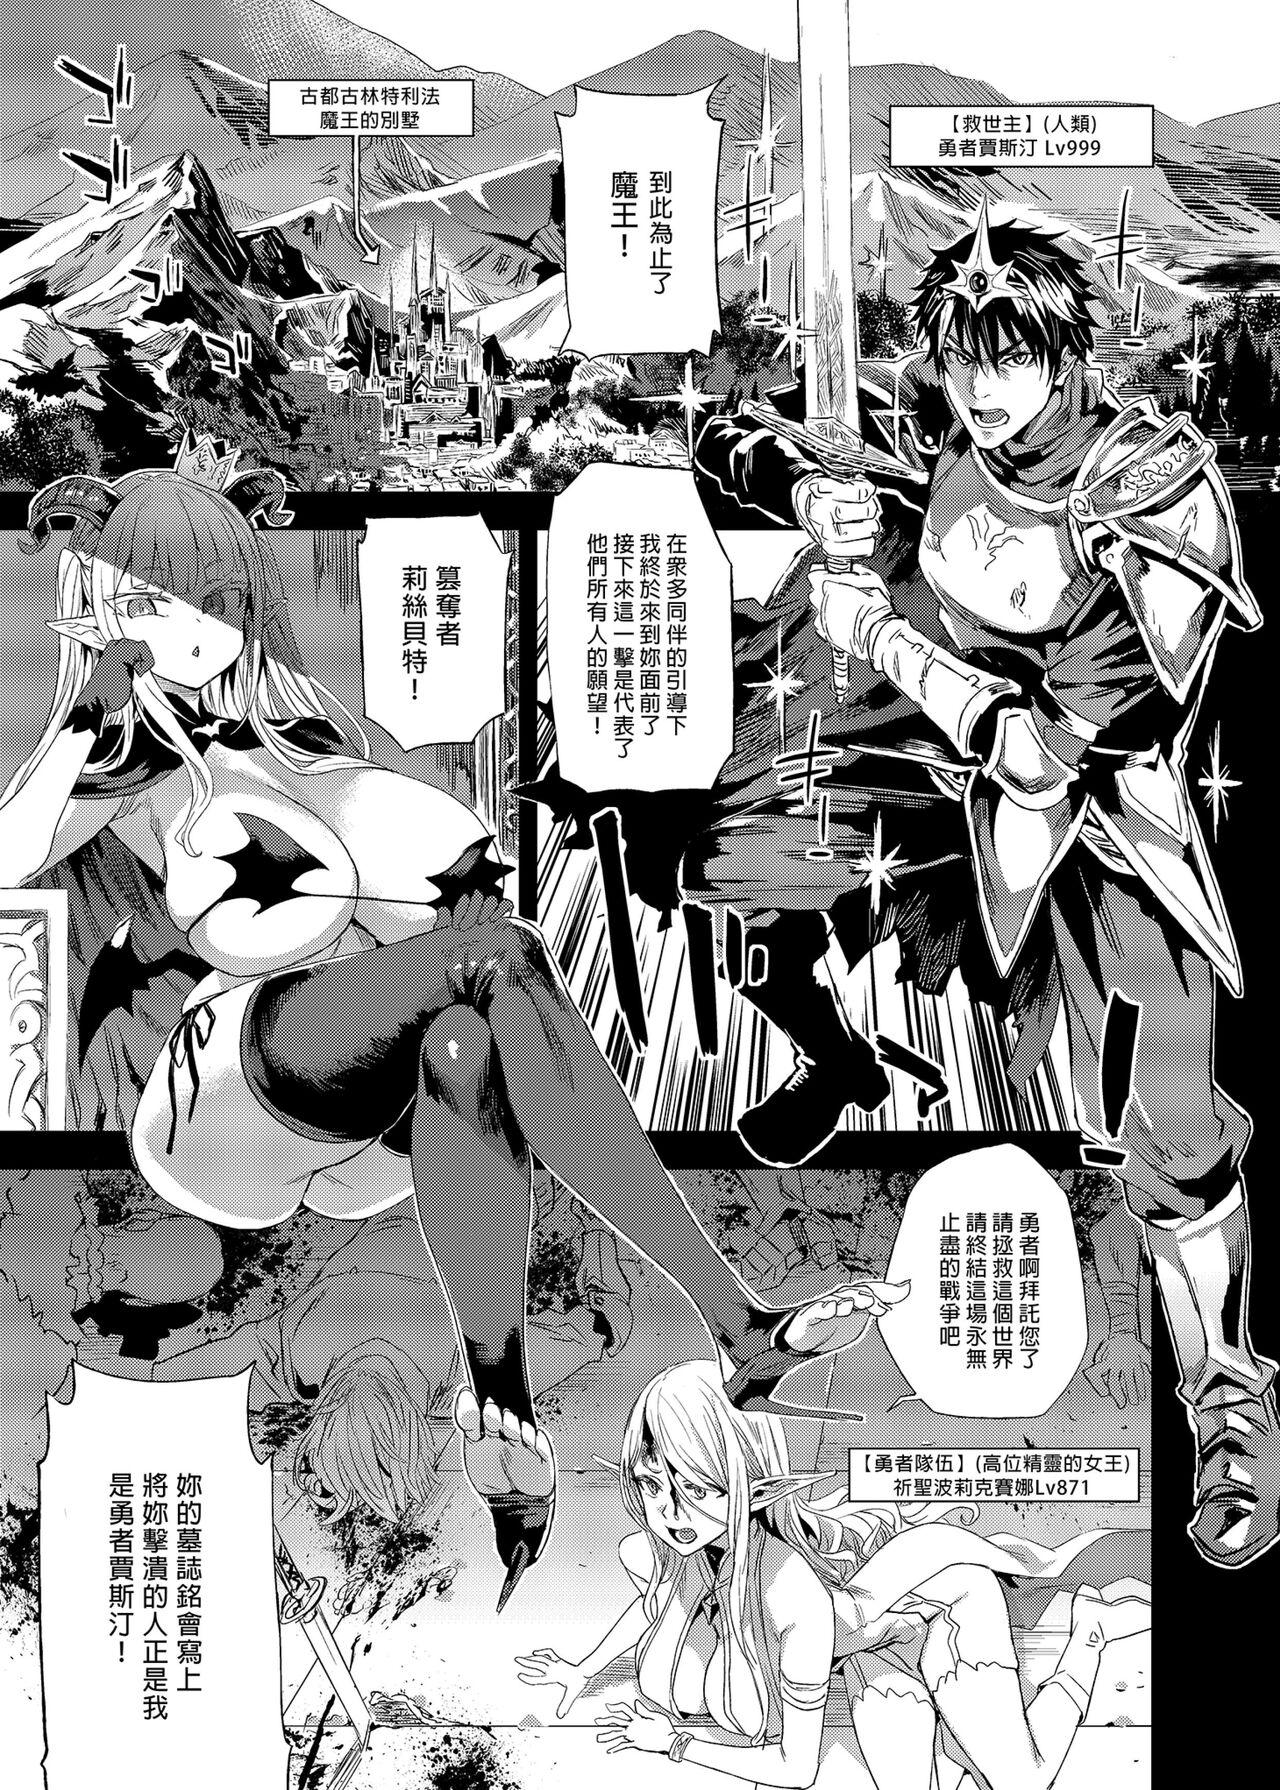 Flagra Succubus Joou vs Zako Goblin 魅魔女王vs雜魚哥布林 - Original Ebony - Page 3